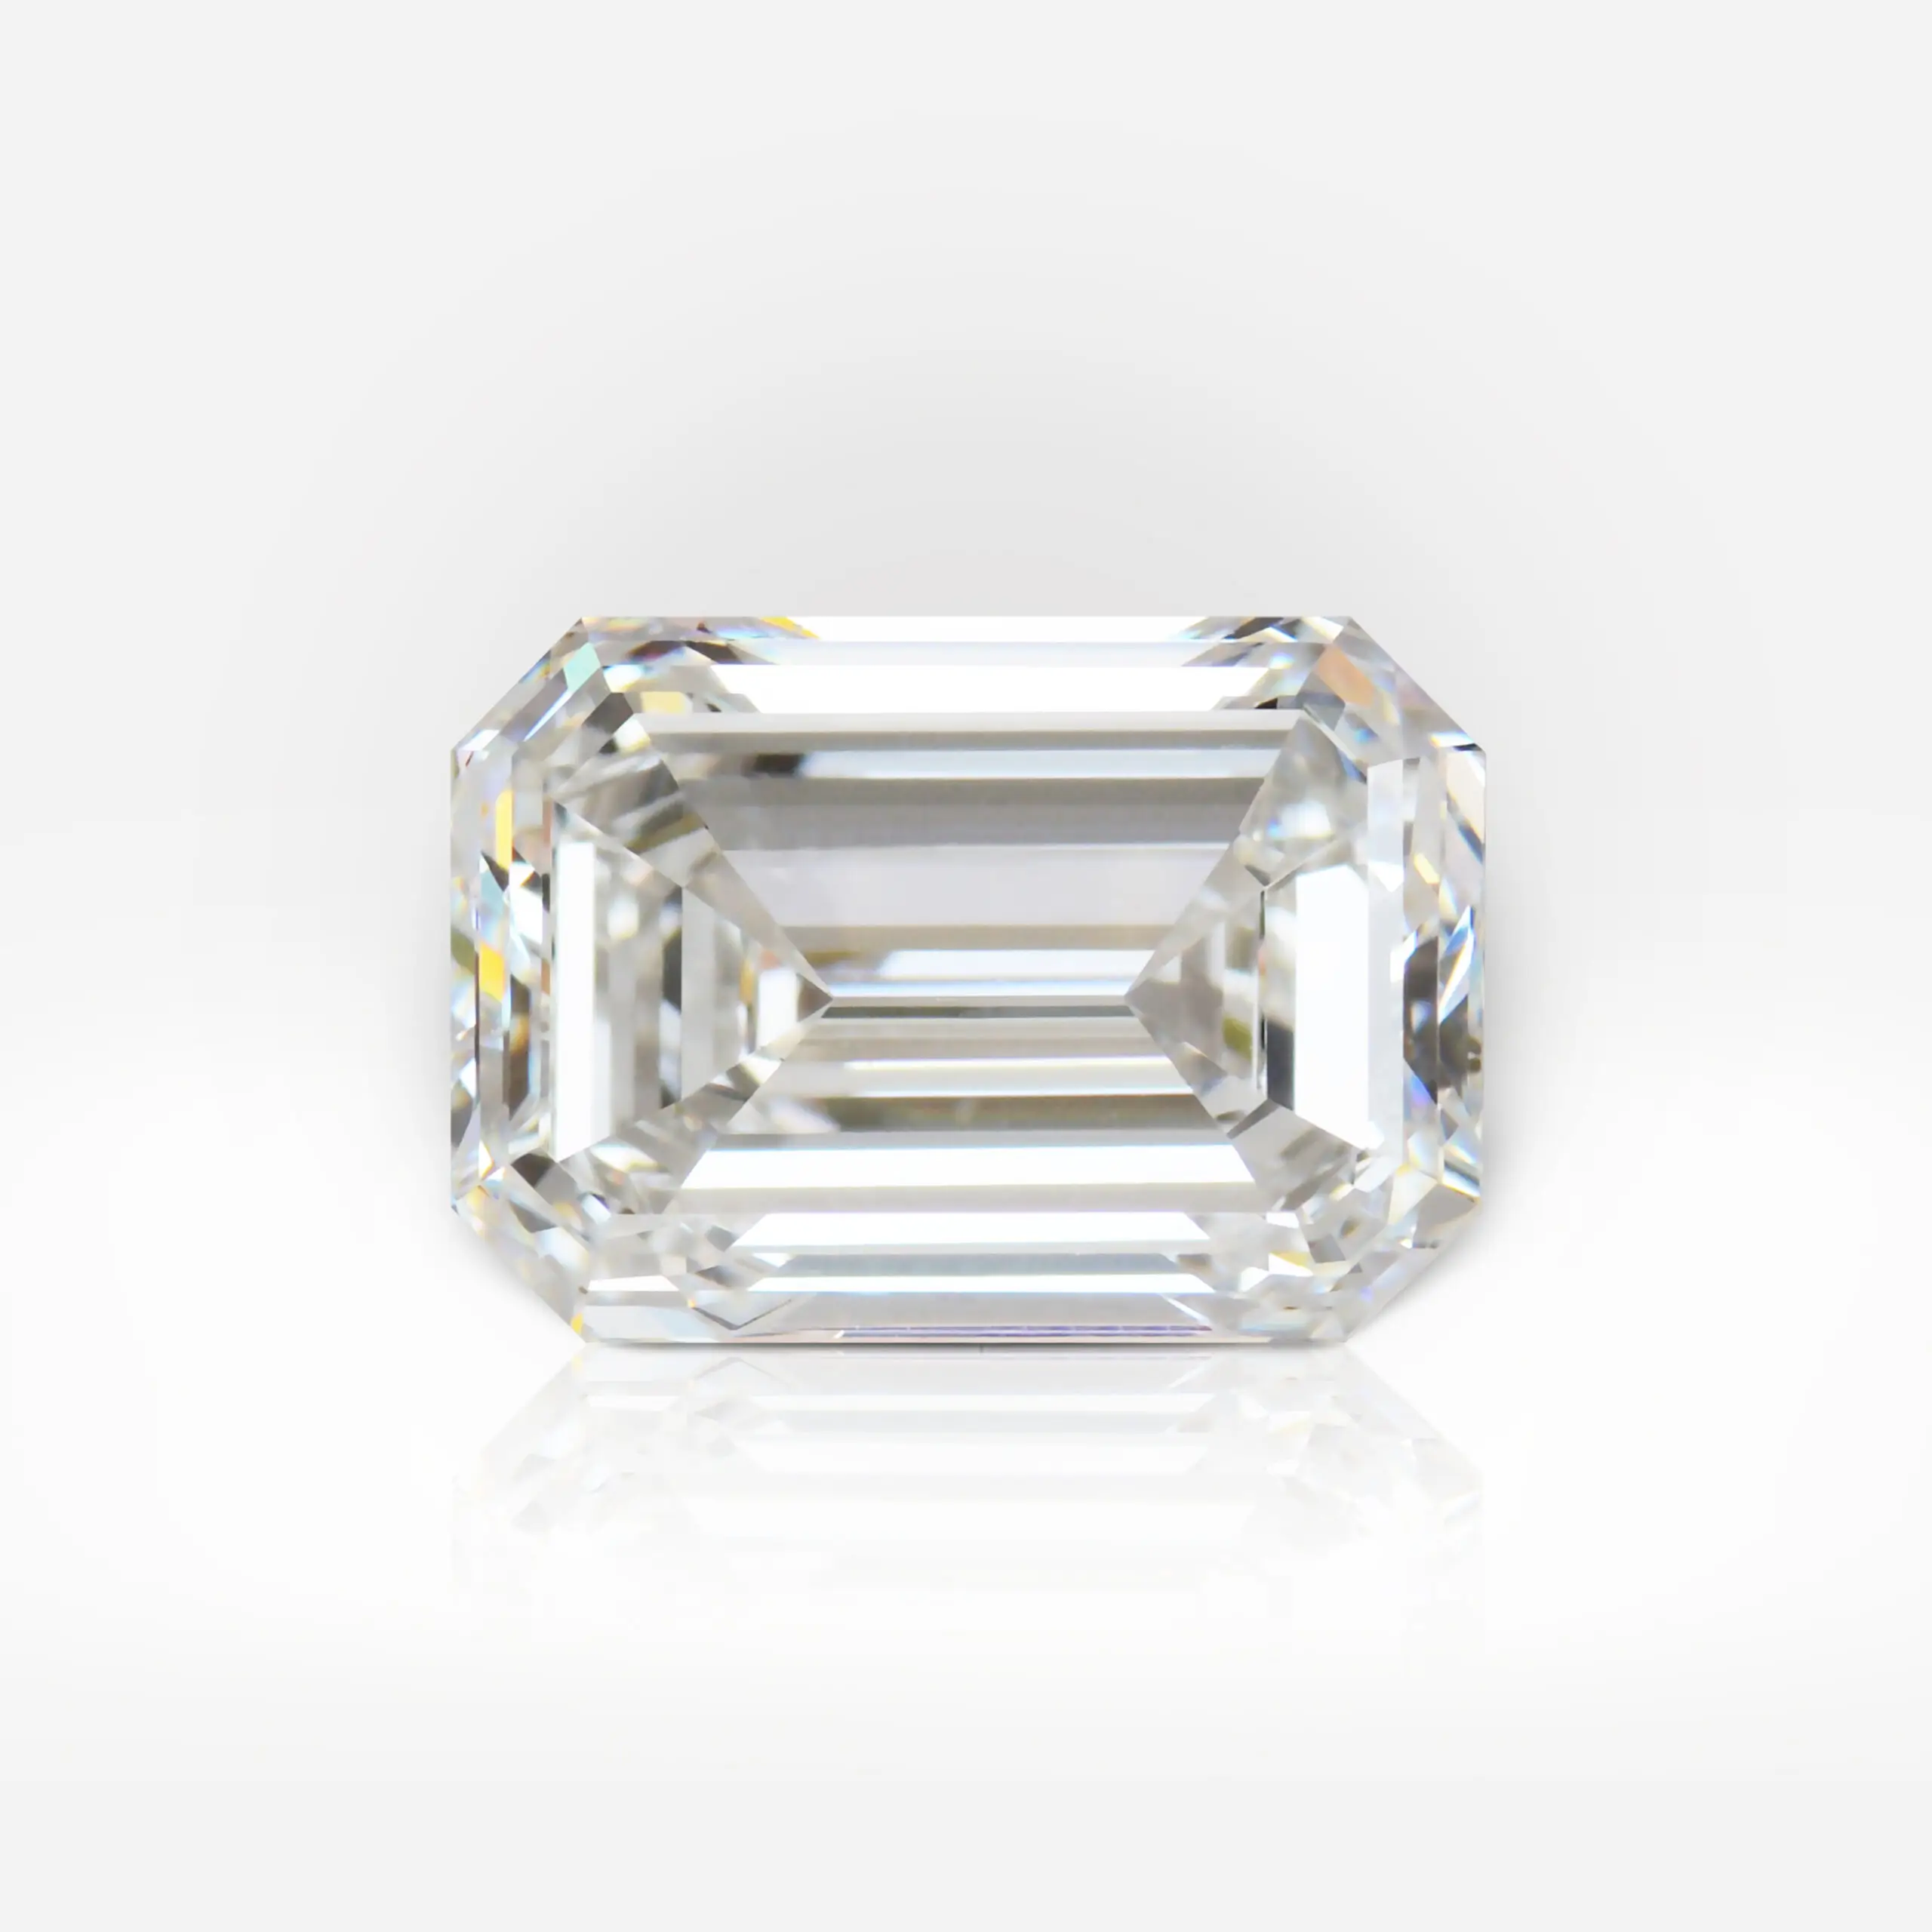 4.01 carat D IF Emerald Shape Diamond GIA - picture 1